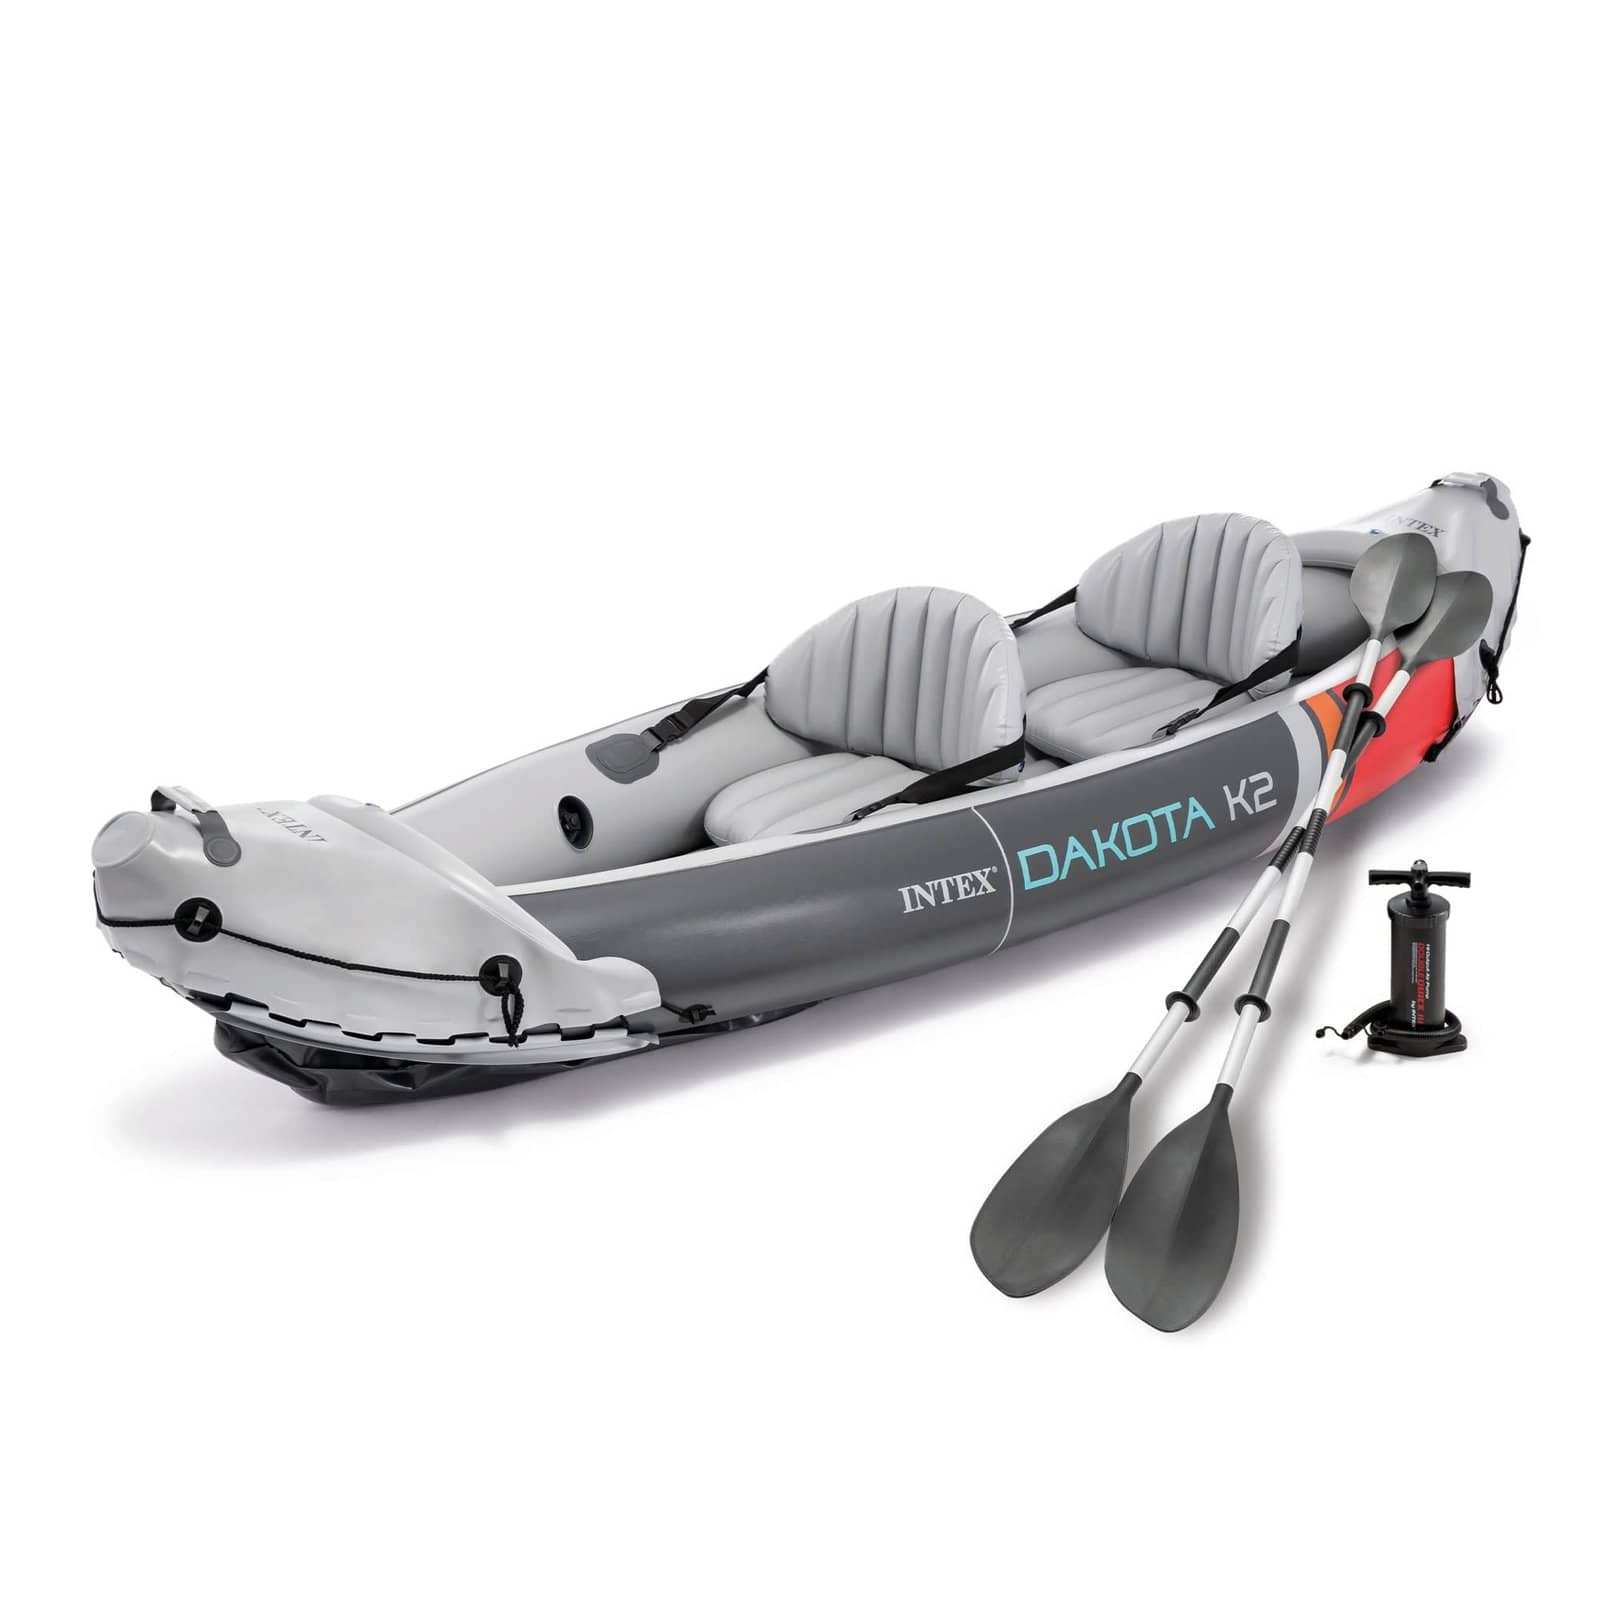 Intex Dakota K2 Inflatable Kayak, two man kayak, perfect tandem kayak